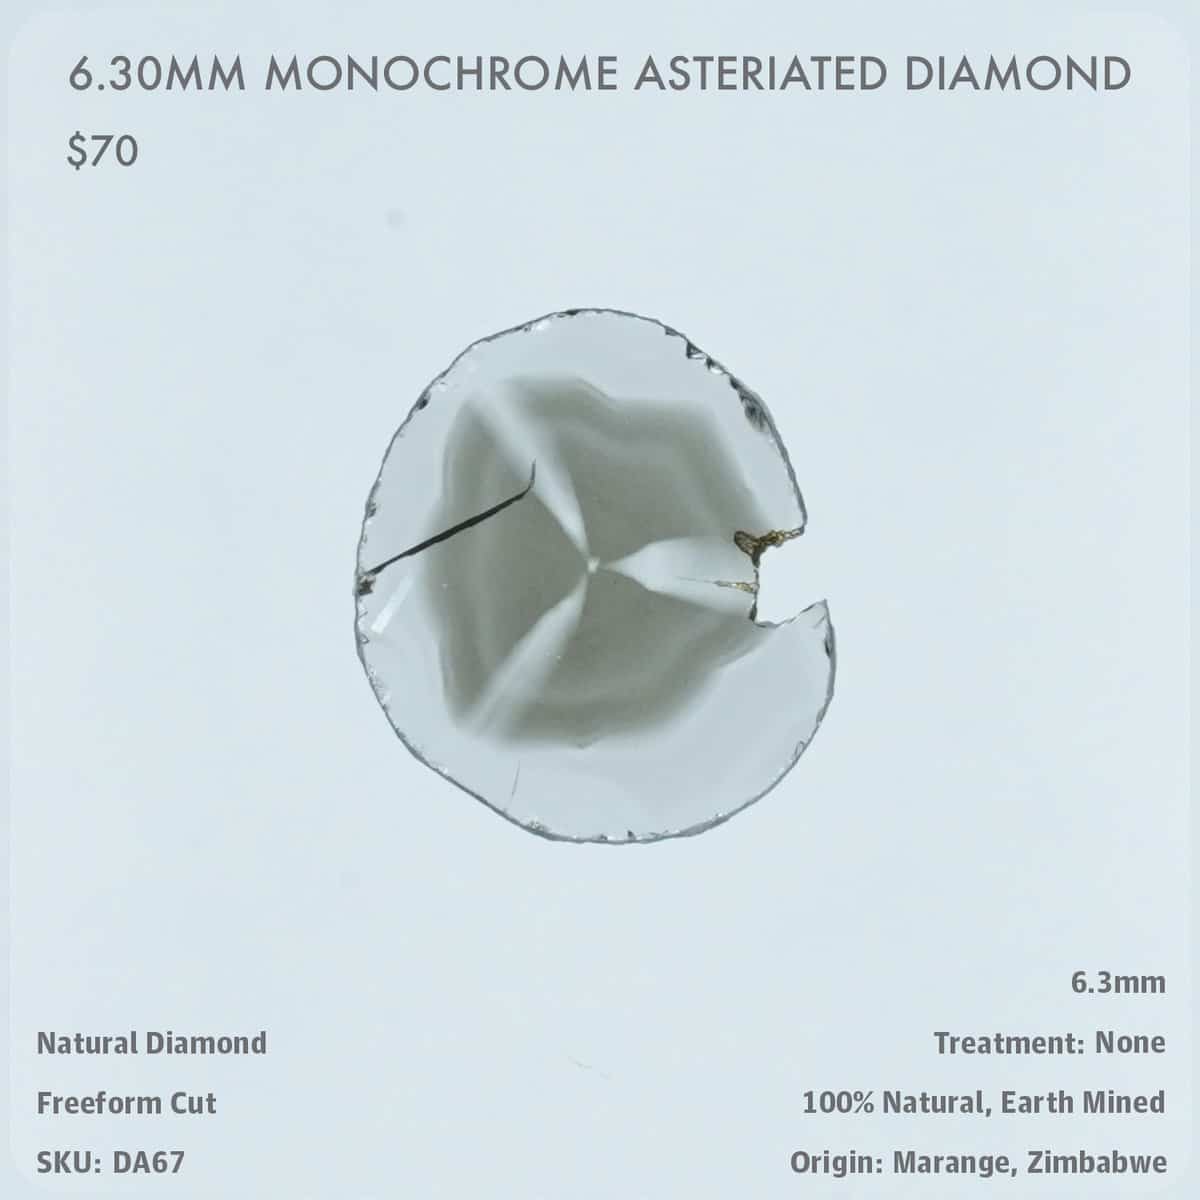 6.30mm Monochrome Asteriated Diamond